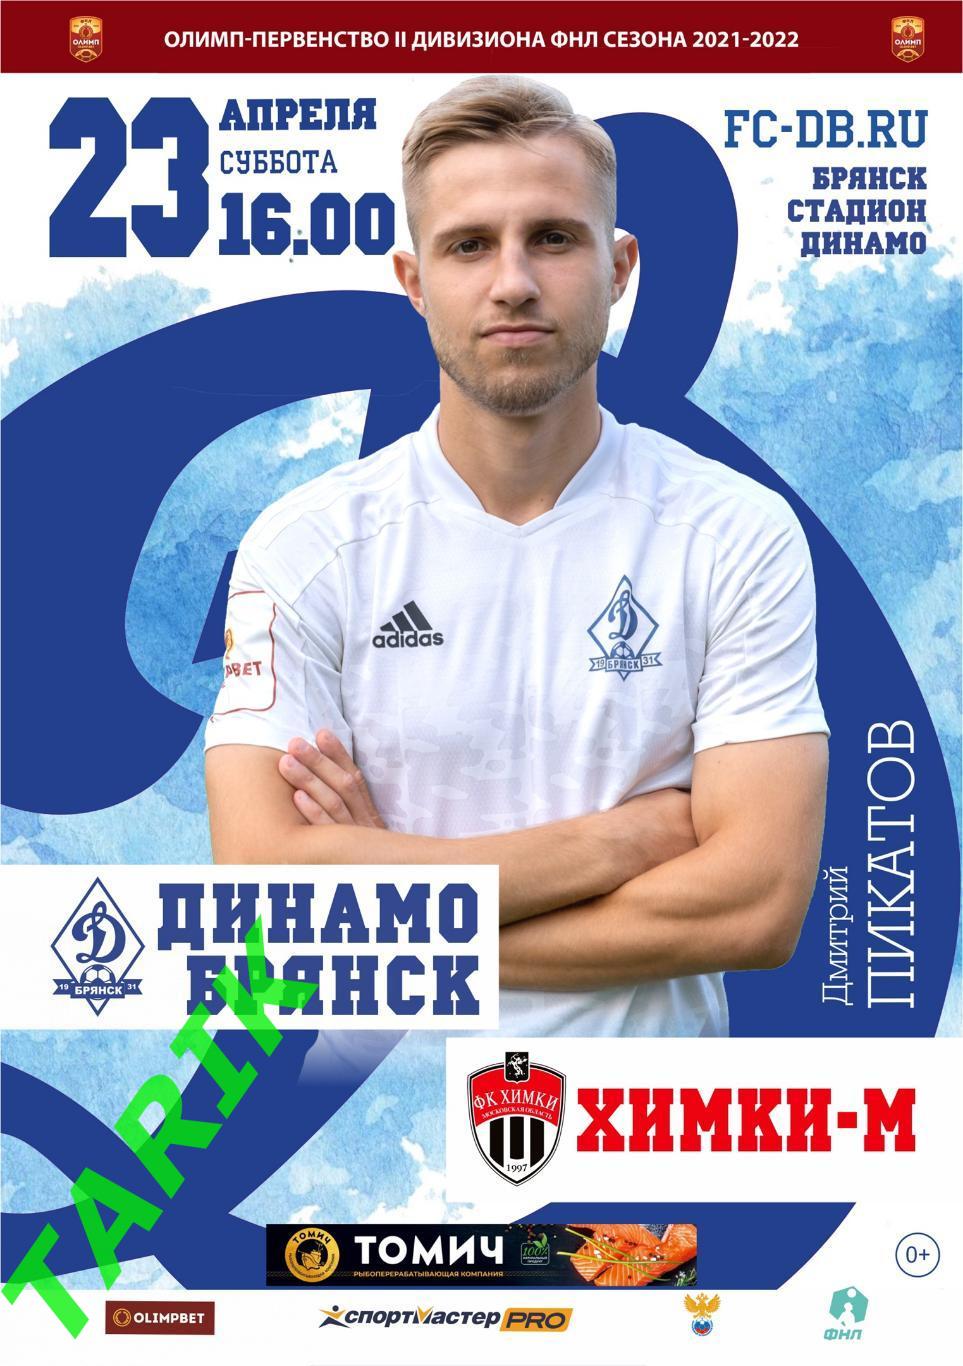 Динамо Брянск - ФК Химки М 23.04.2022 официальная